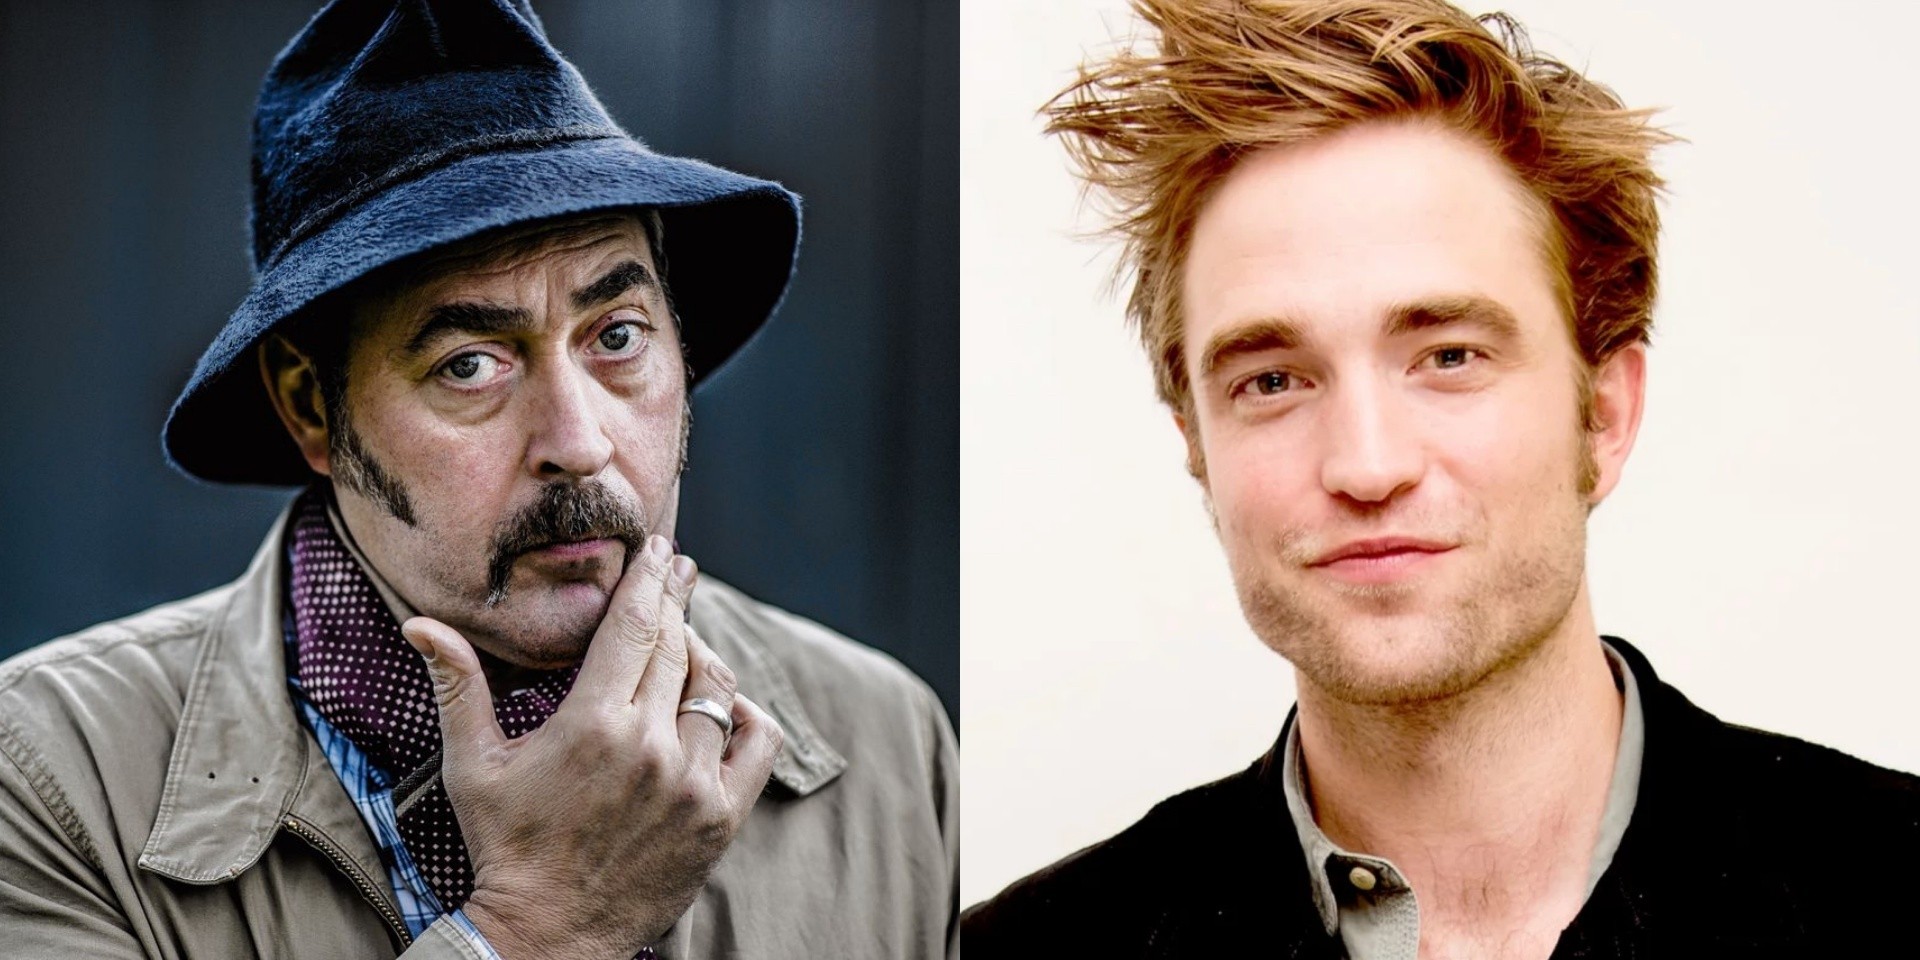 Tindersticks collaborates with Robert Pattinson on 'Willow' – listen